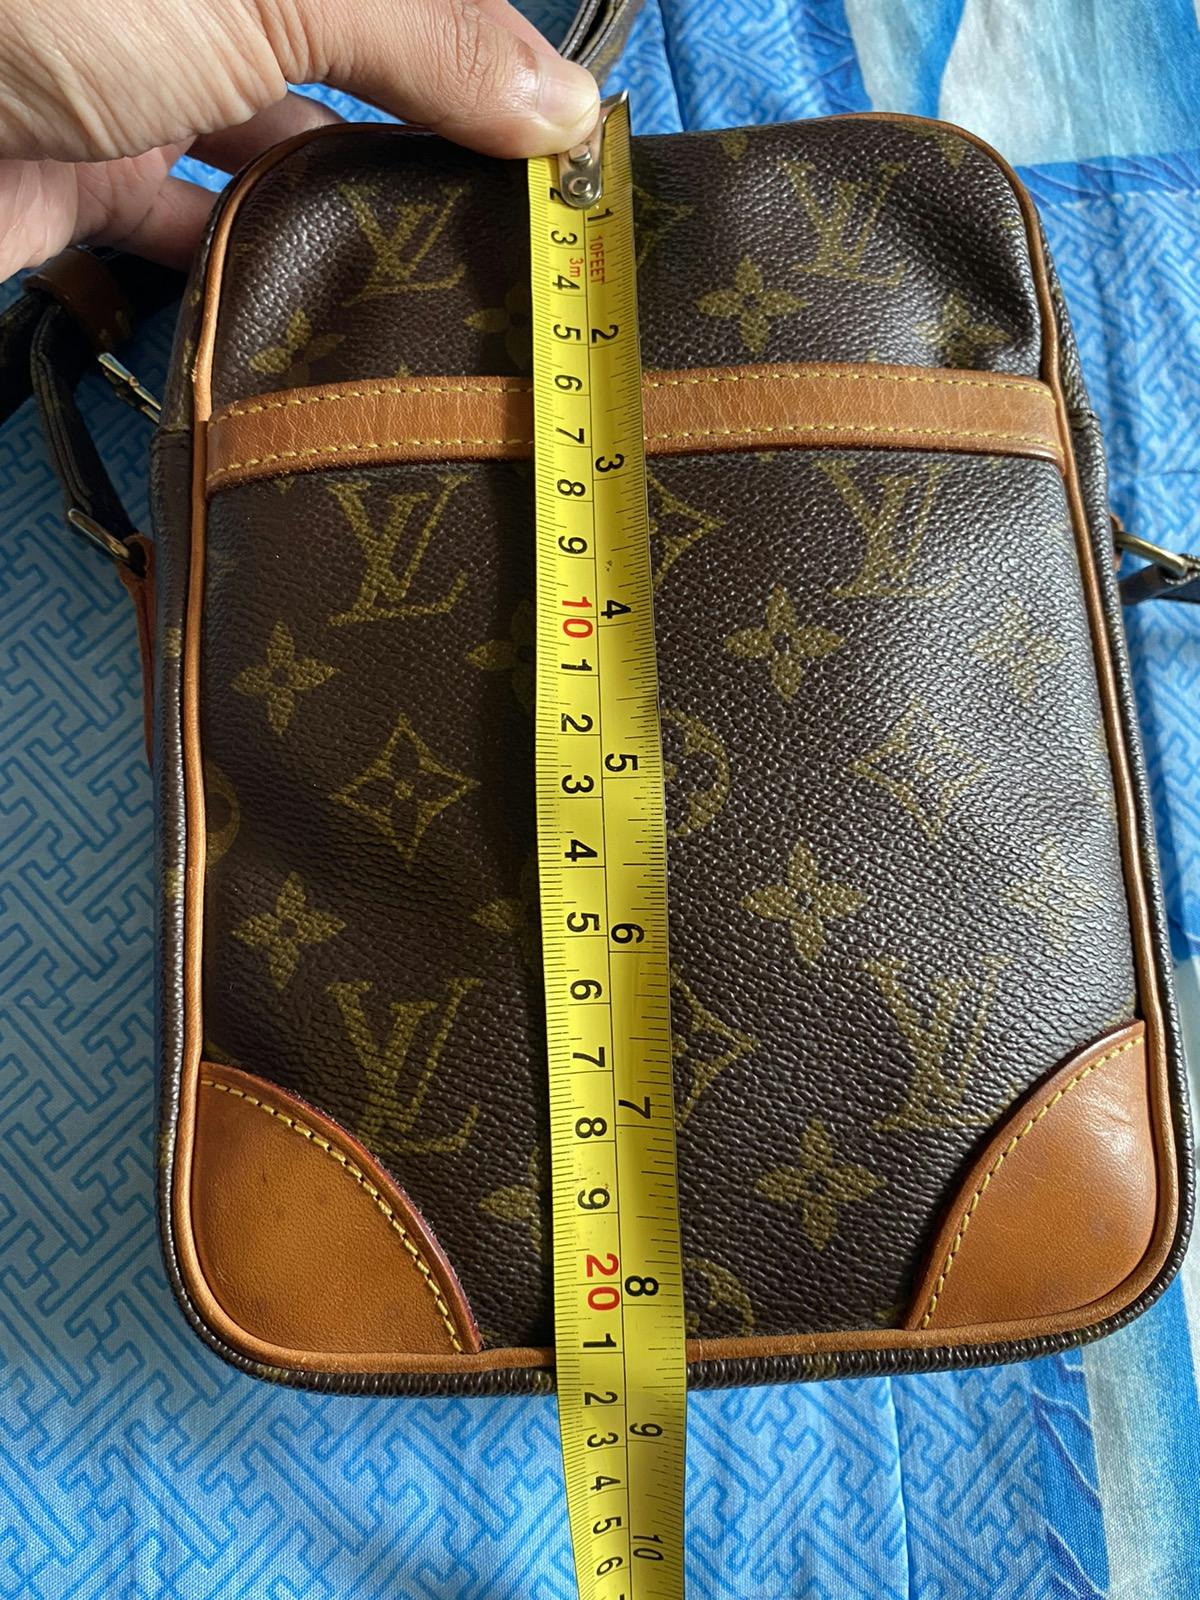 Danube Louis Vuitton Vintage Monogram Mini Bag Authentic 